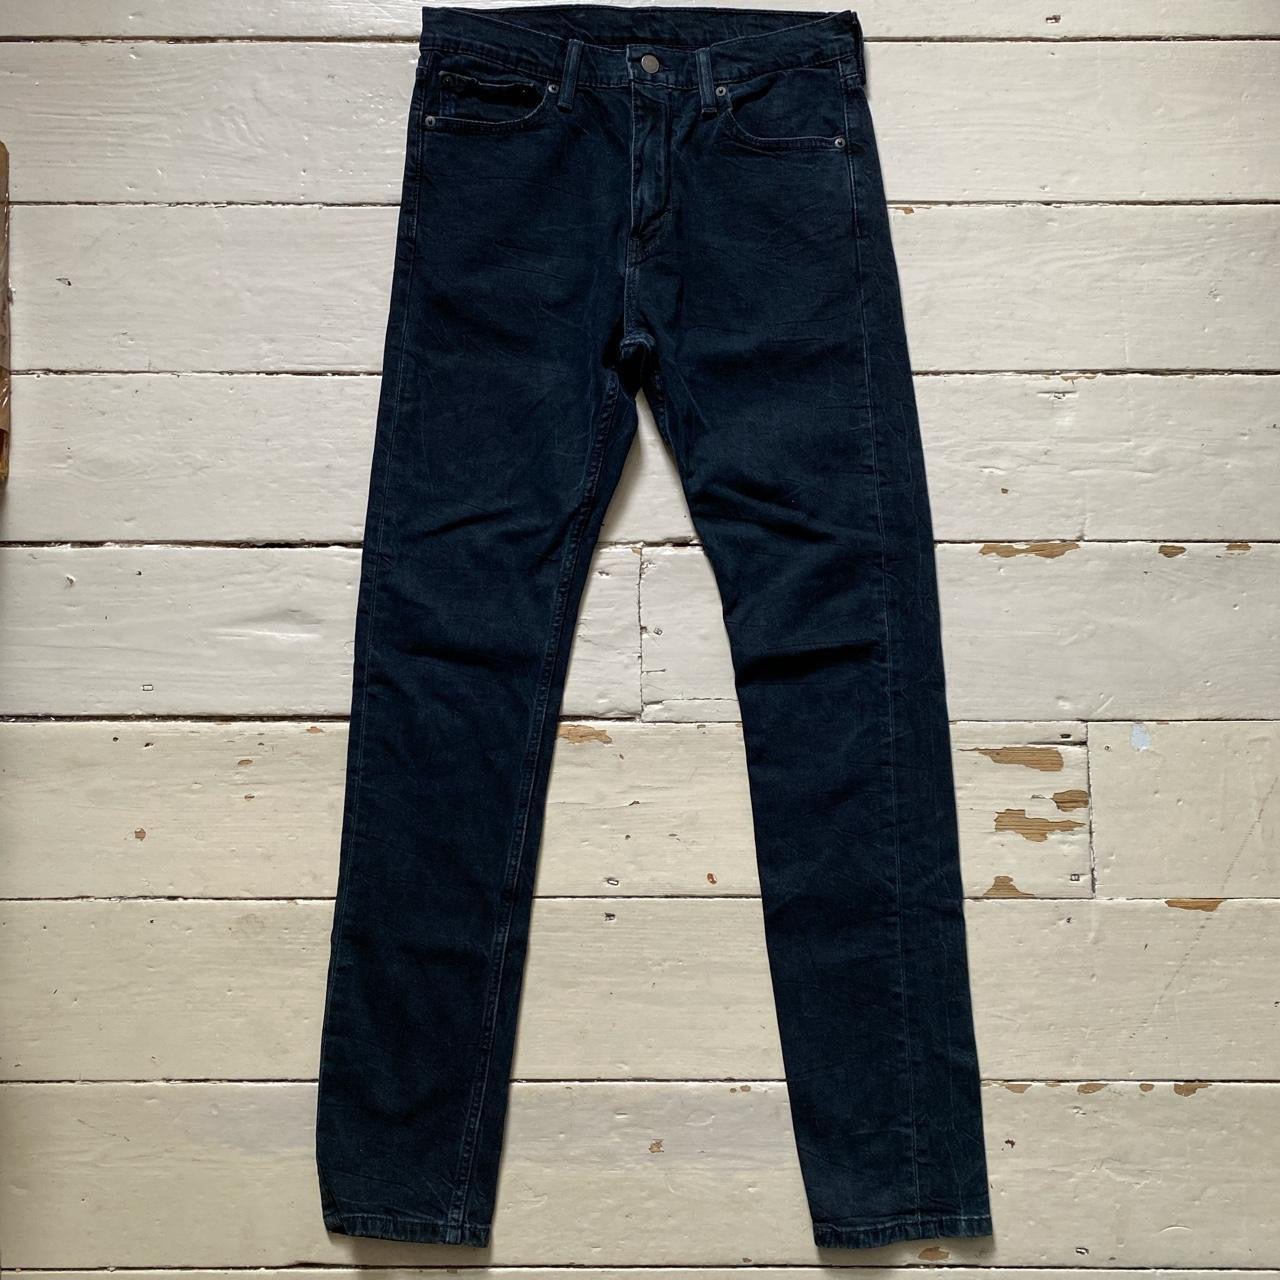 Levis 510 Navy Jeans (32/33)